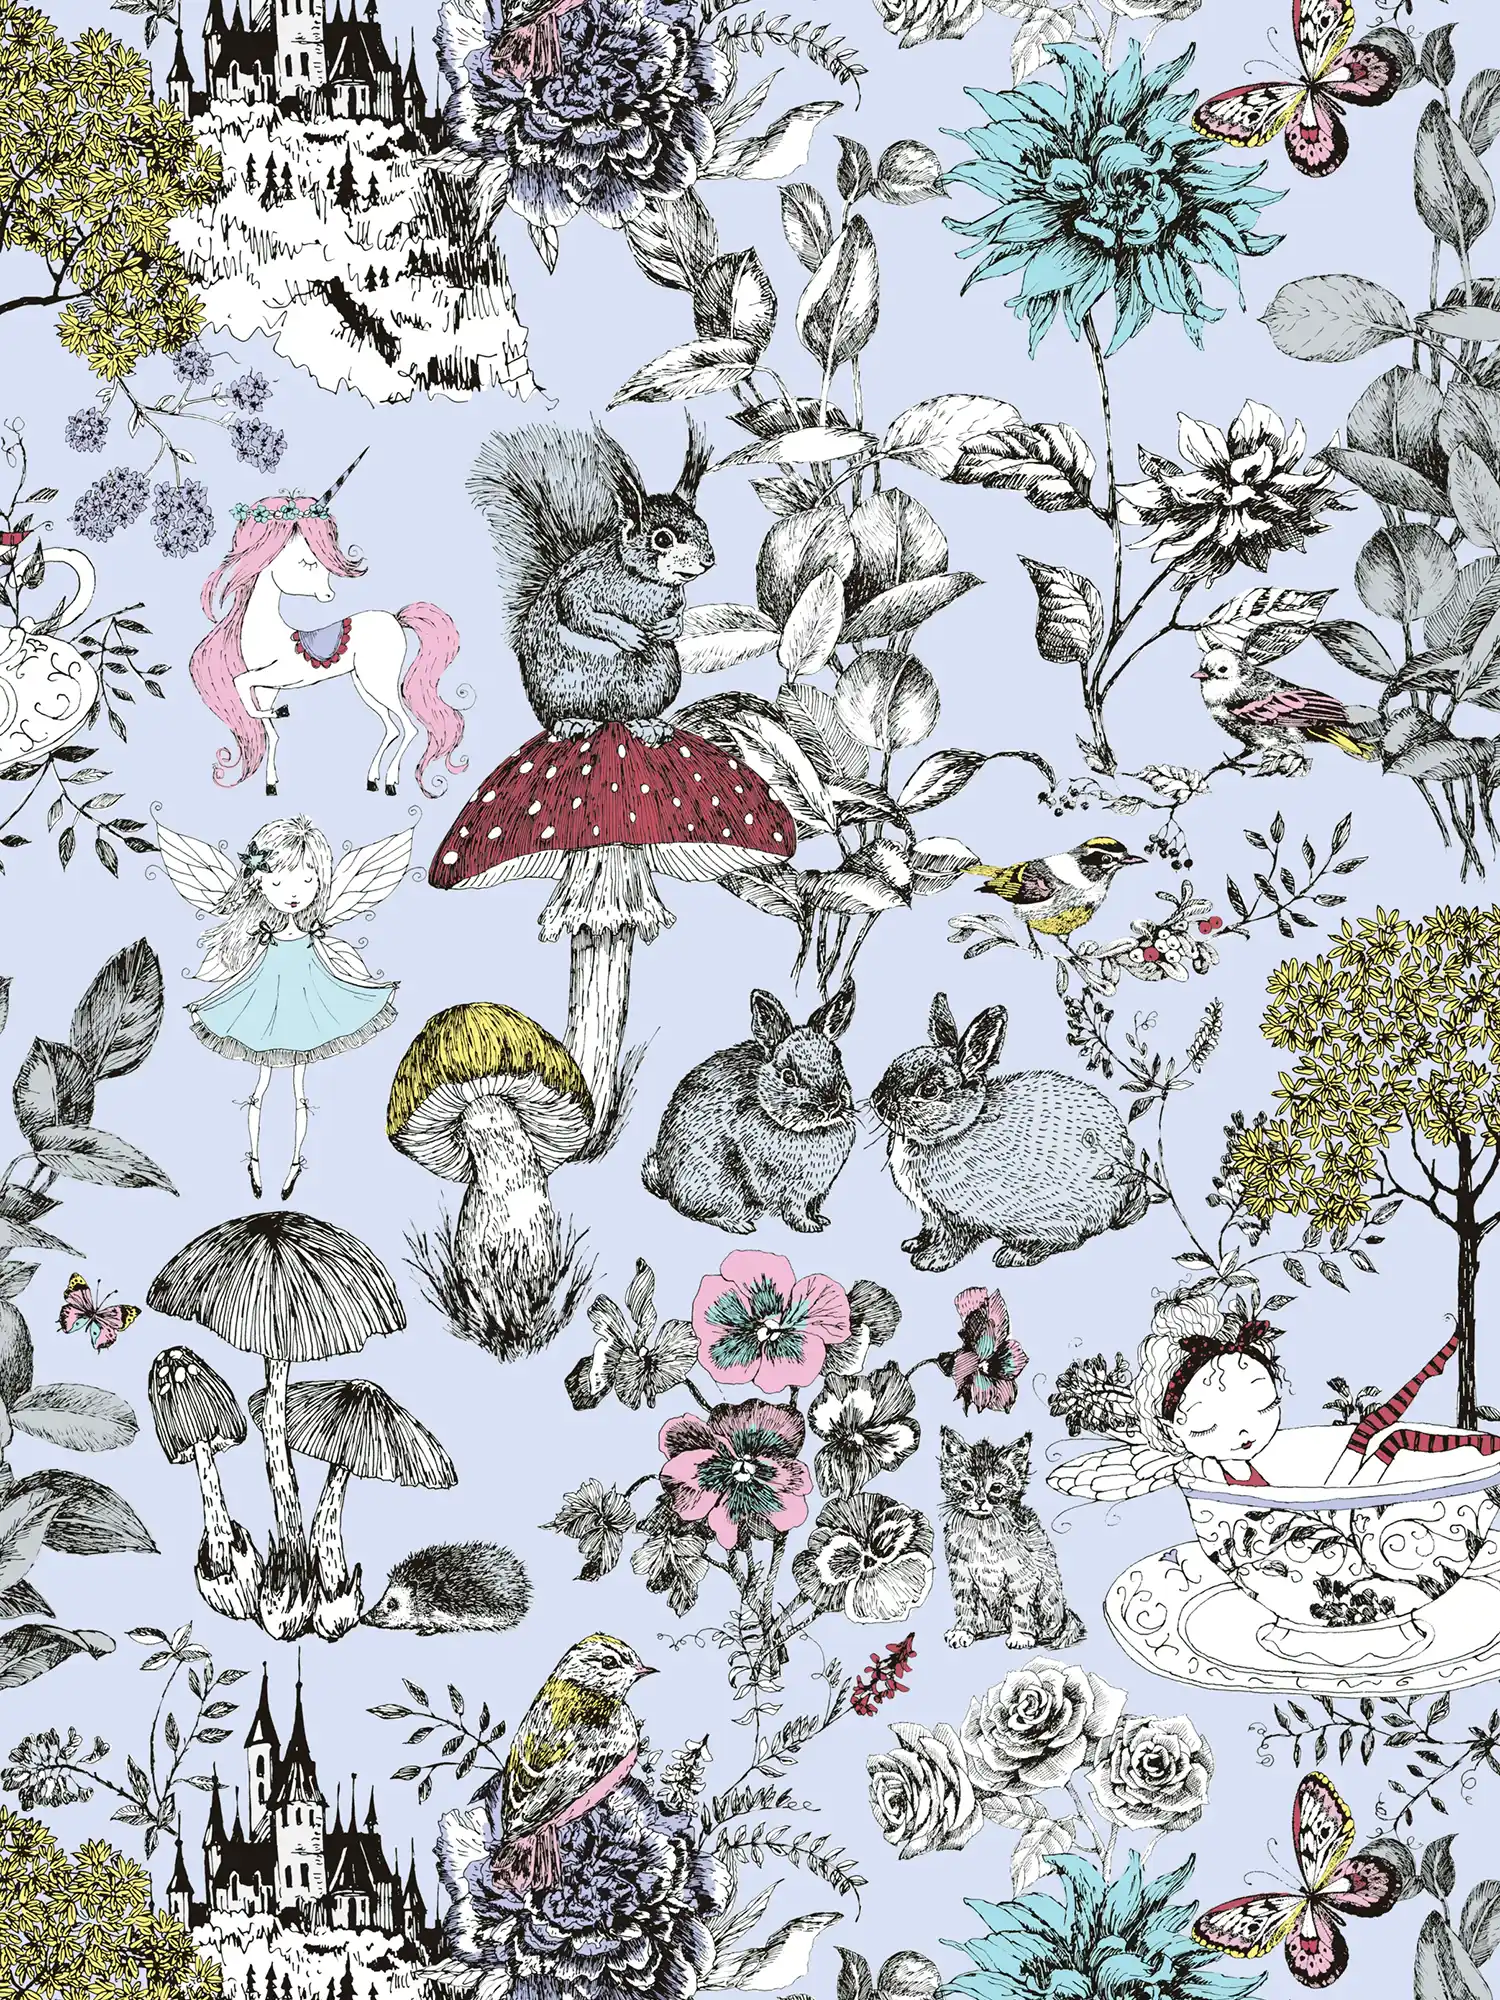         Fairies wallpaper forest motif Nursery - grey, black, white
    